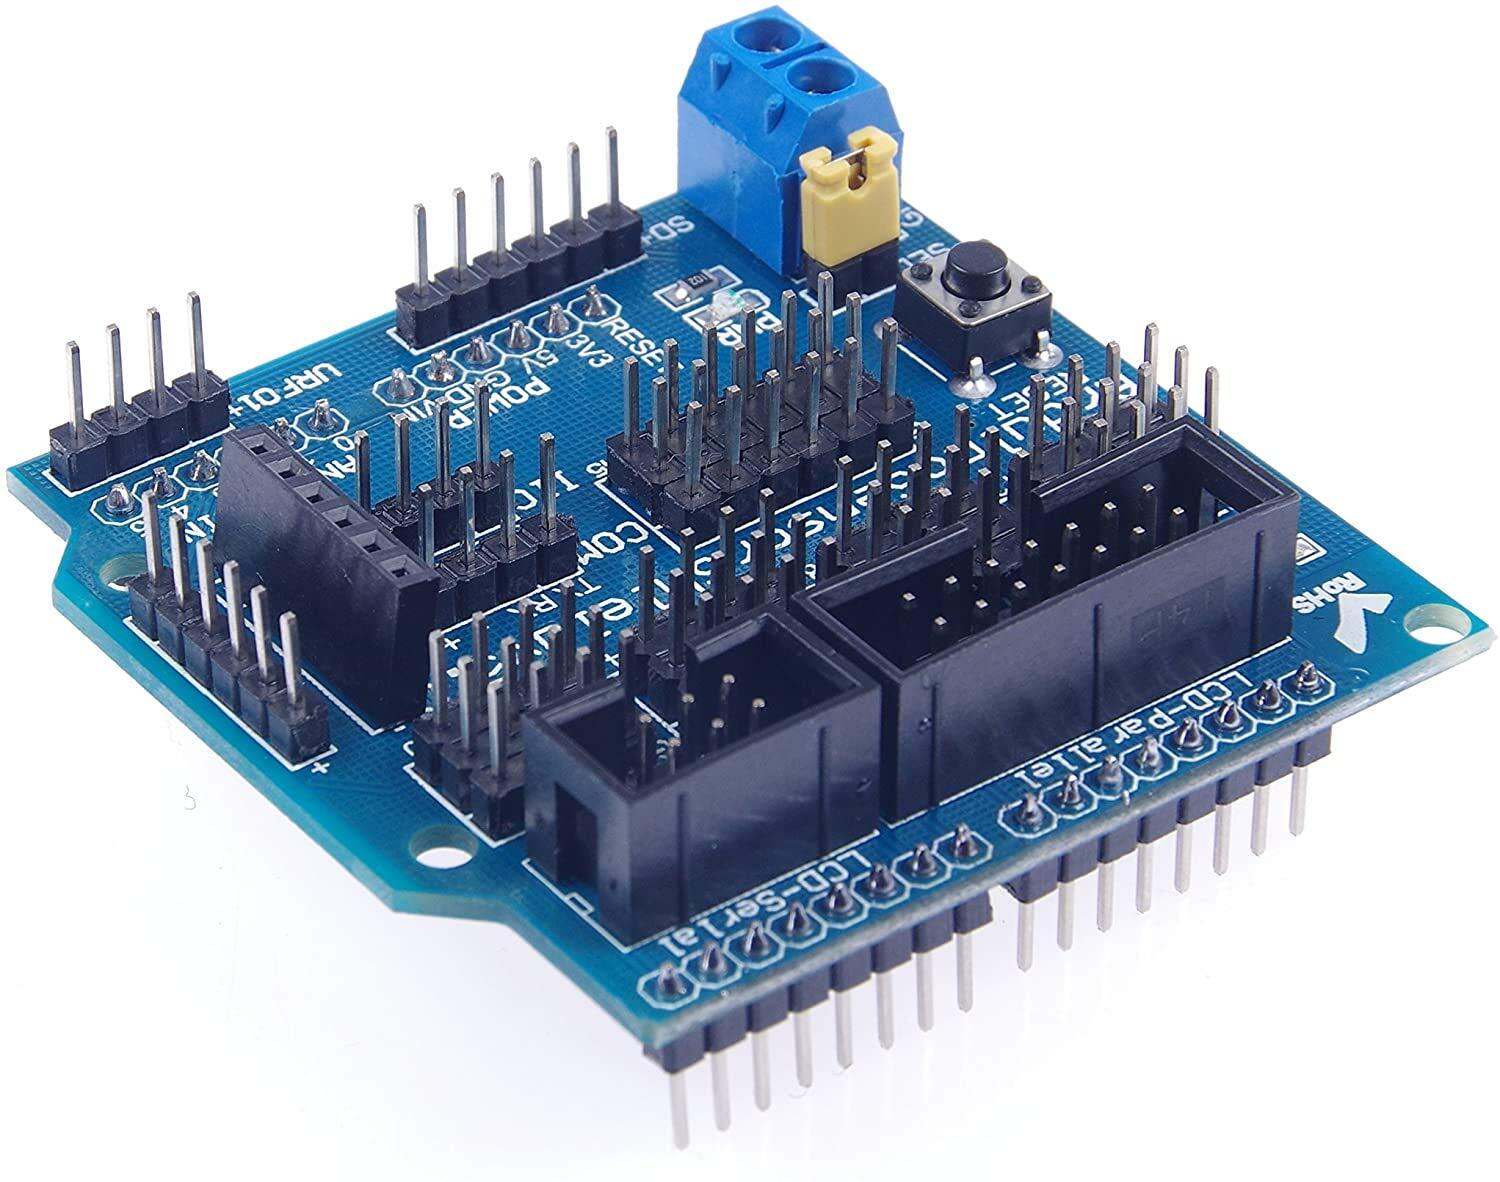 Arduino Compatible Sensor Shield V5.0 Expansion Board